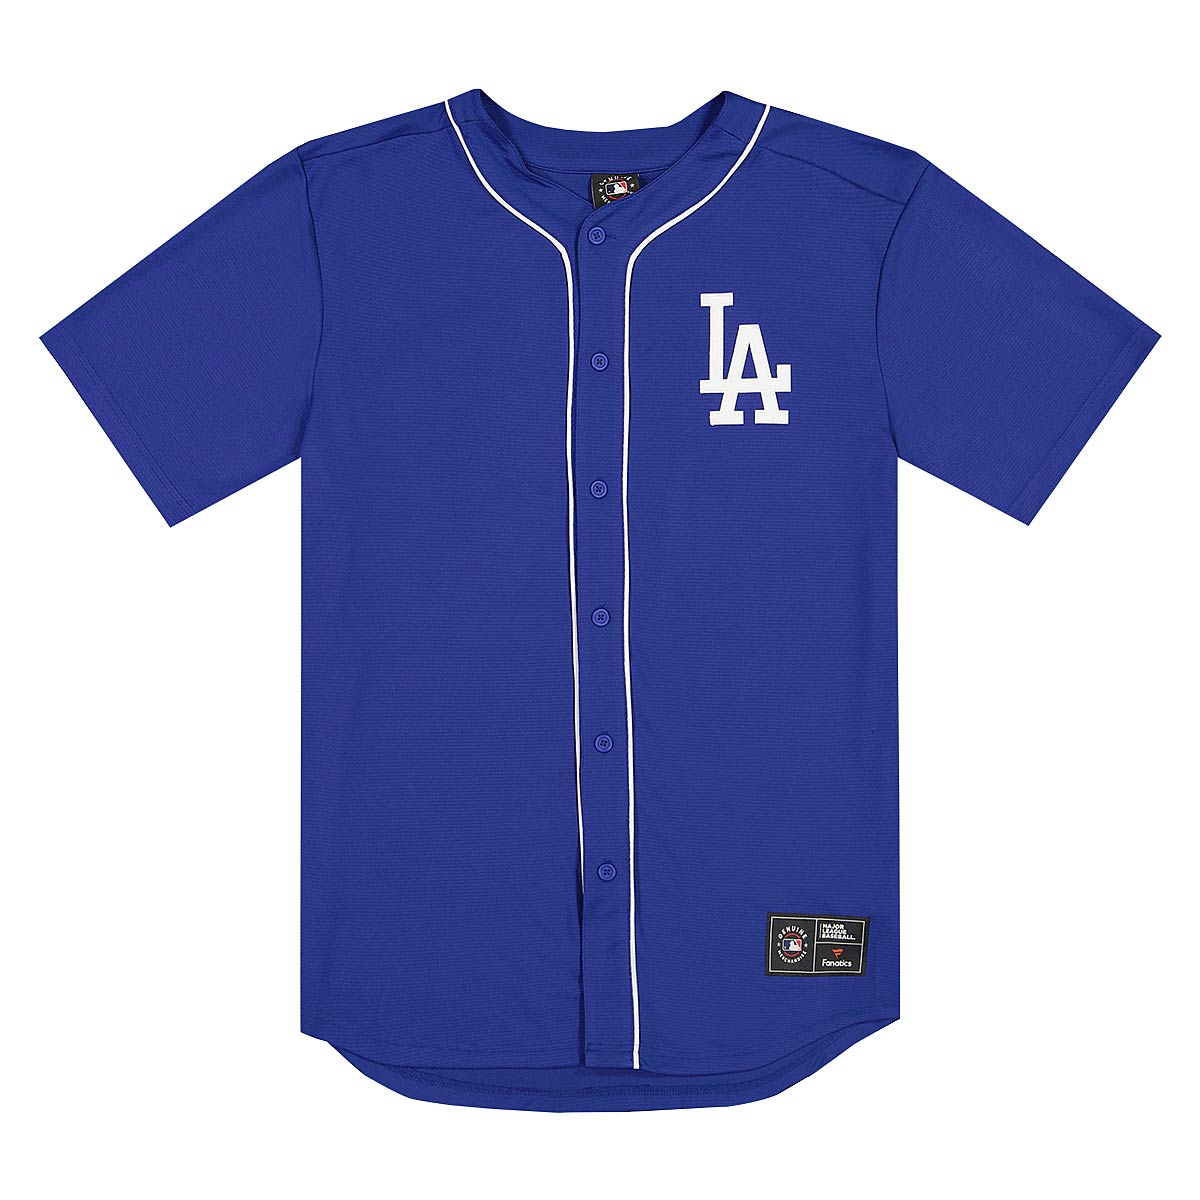 Image of Fanatics MLB Los Angeles Dodgers Foundation Baseball Jersey, Deep Royal/white